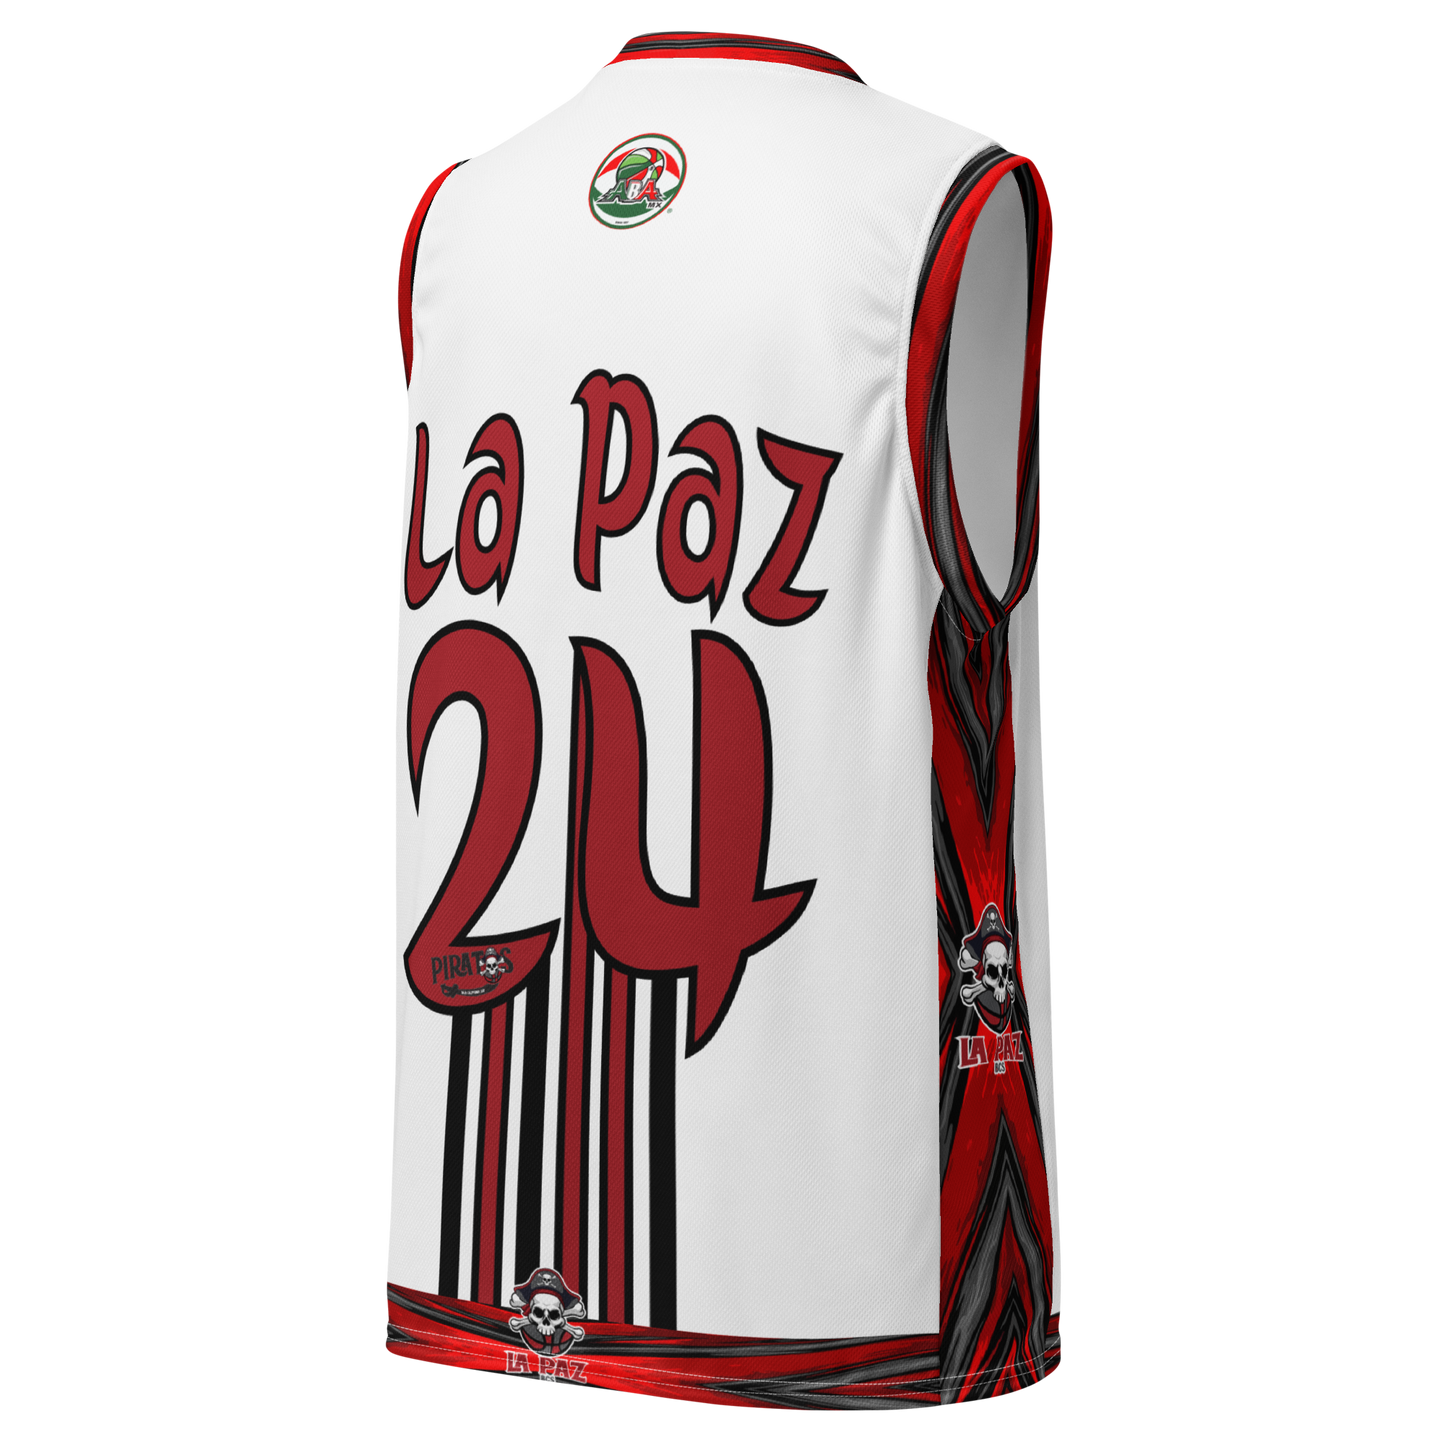 abamx Store The La Paz Piratas Basketball Team's White Home Jersey XL